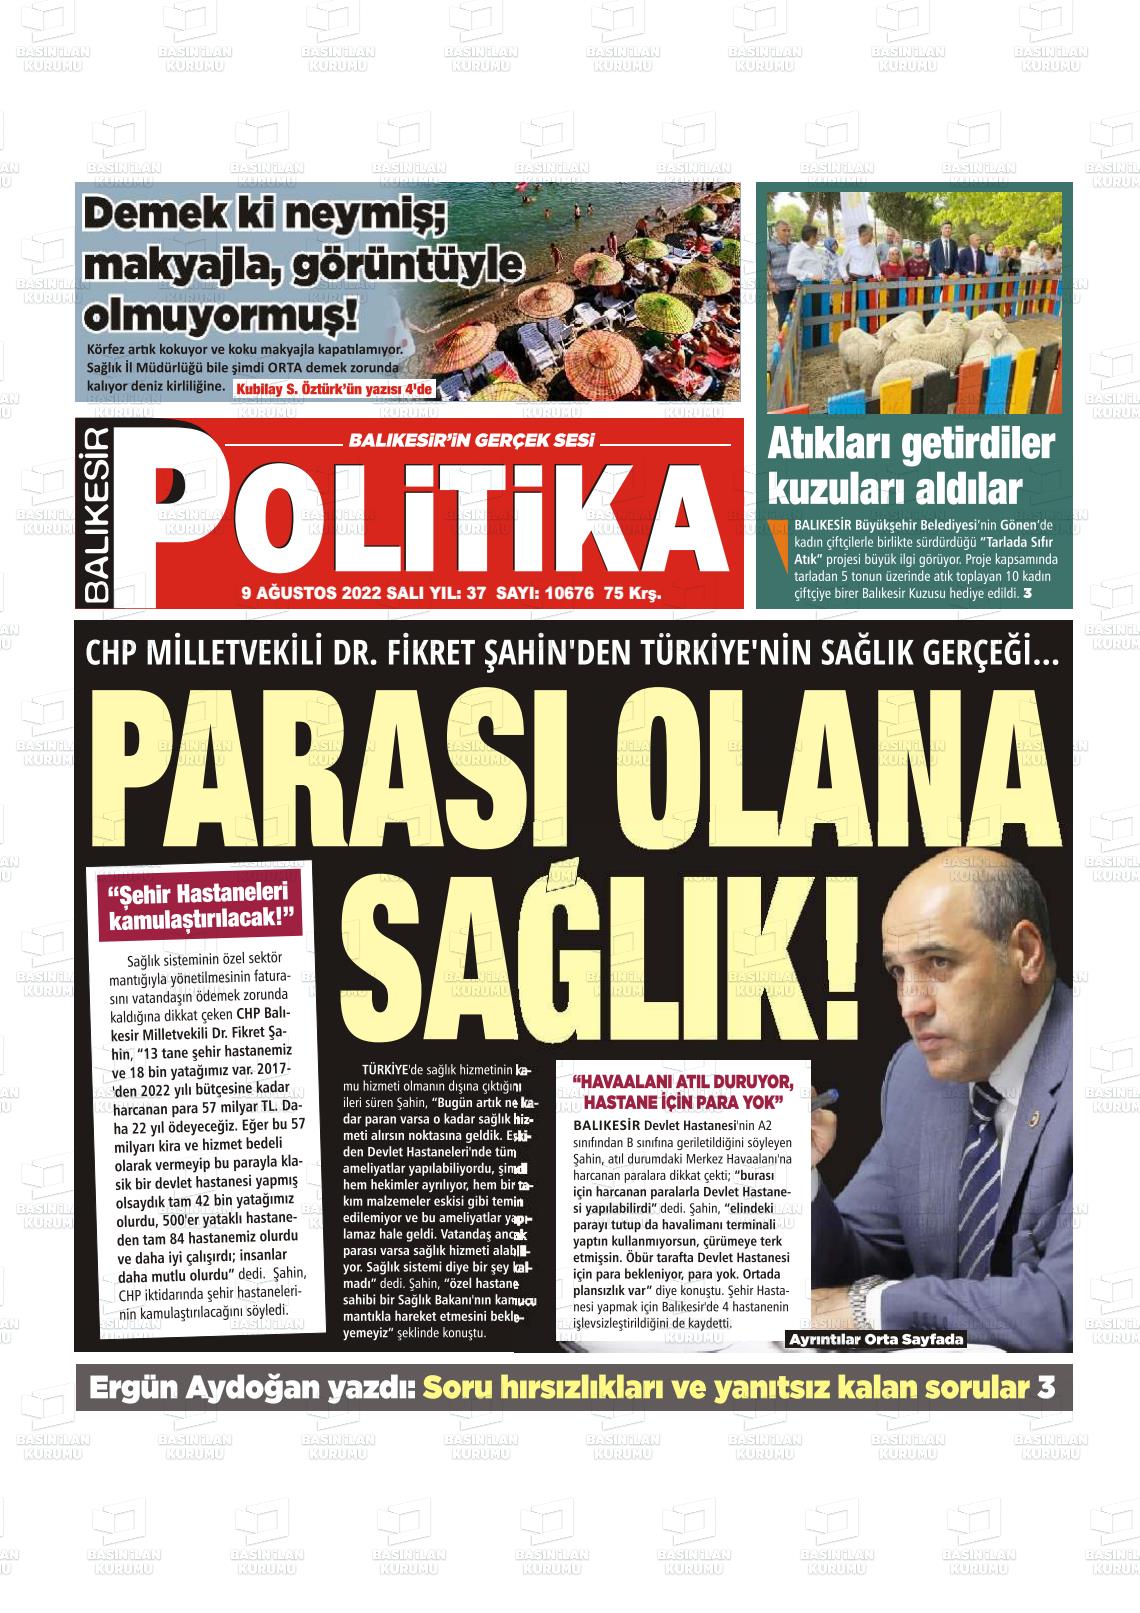 09 Ağustos 2022 Balıkesir Politika Gazete Manşeti